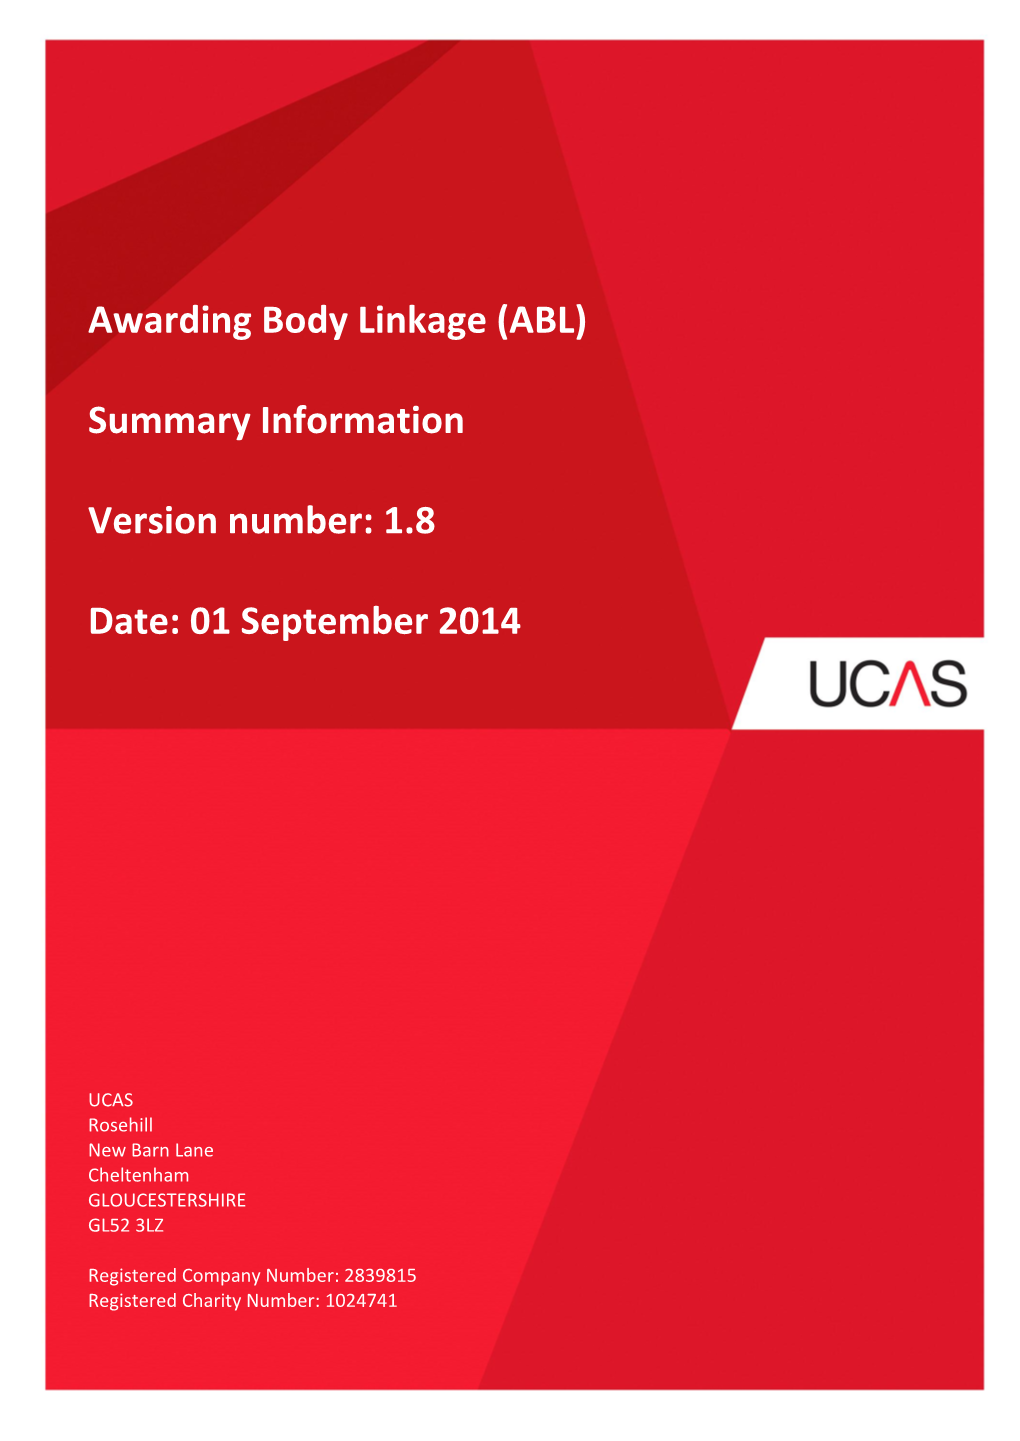 Awarding Body Linkage (ABL) Summary Information Version Number